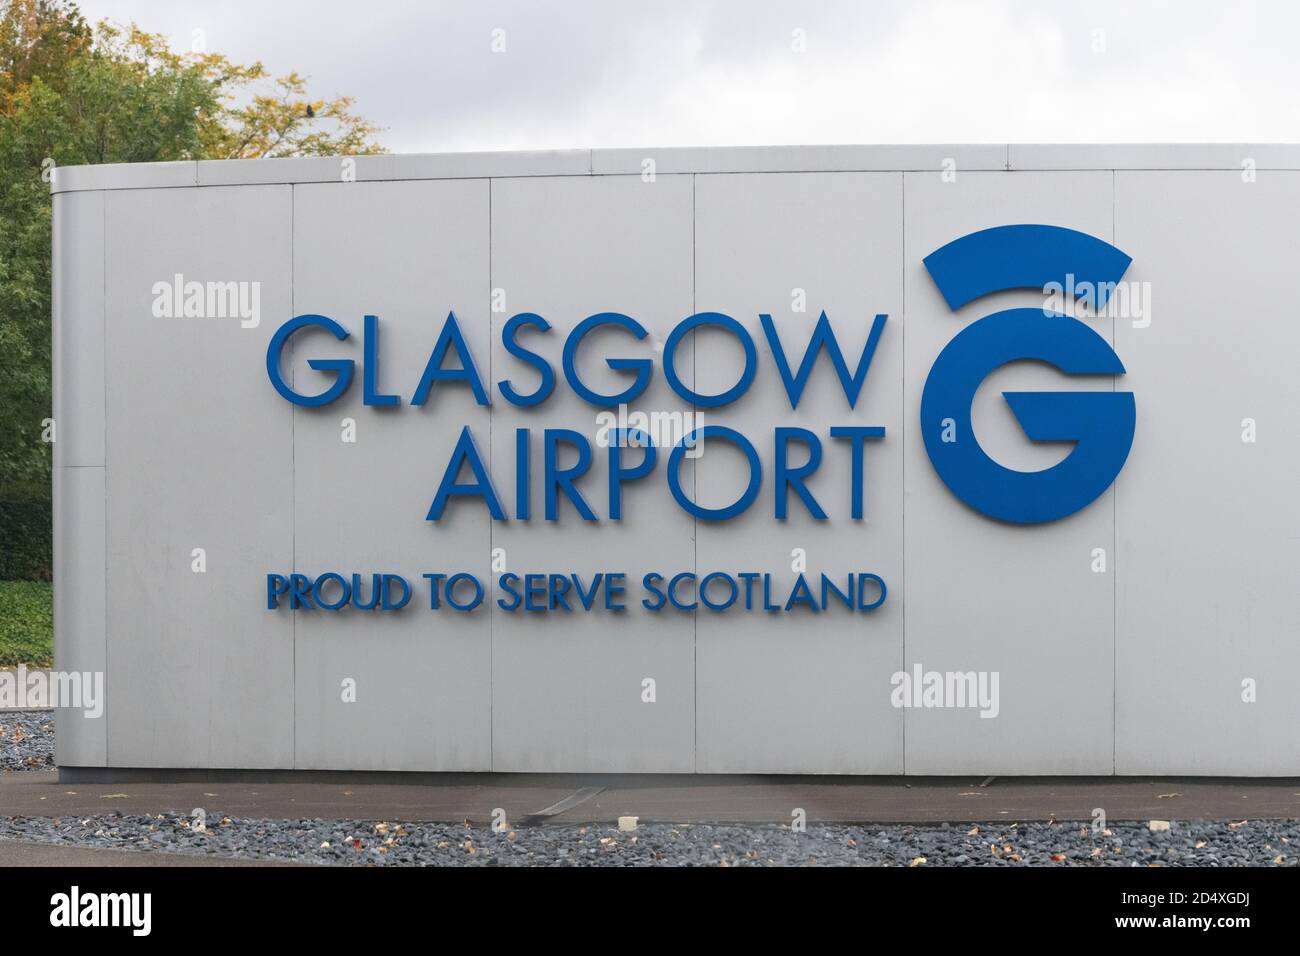 Glasgow Airport sign and logo, Glasgow, Scotland, UK Stock Photo